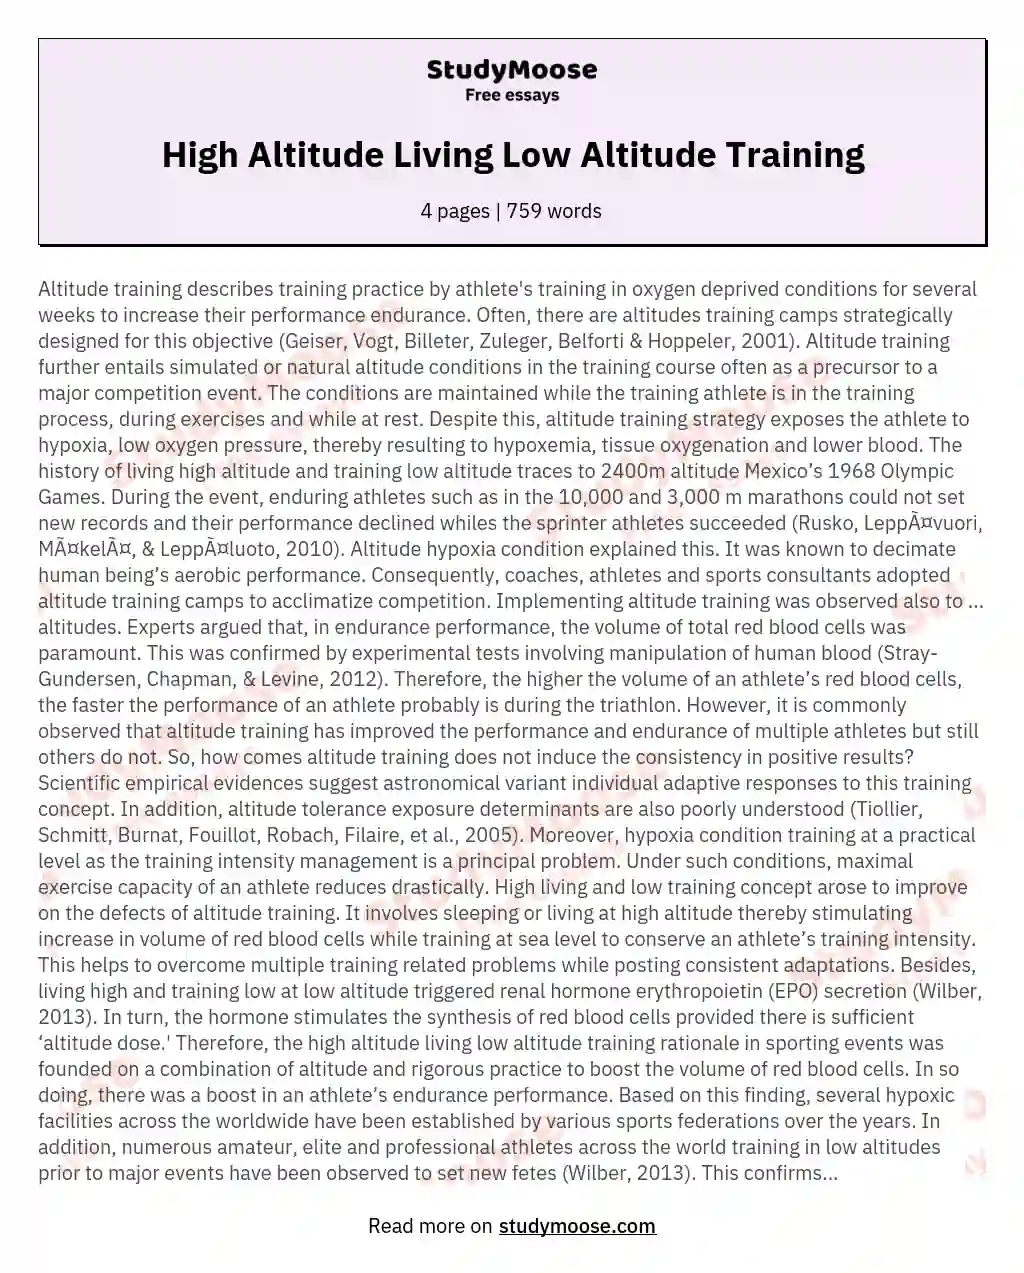 High Altitude Living Low Altitude Training essay